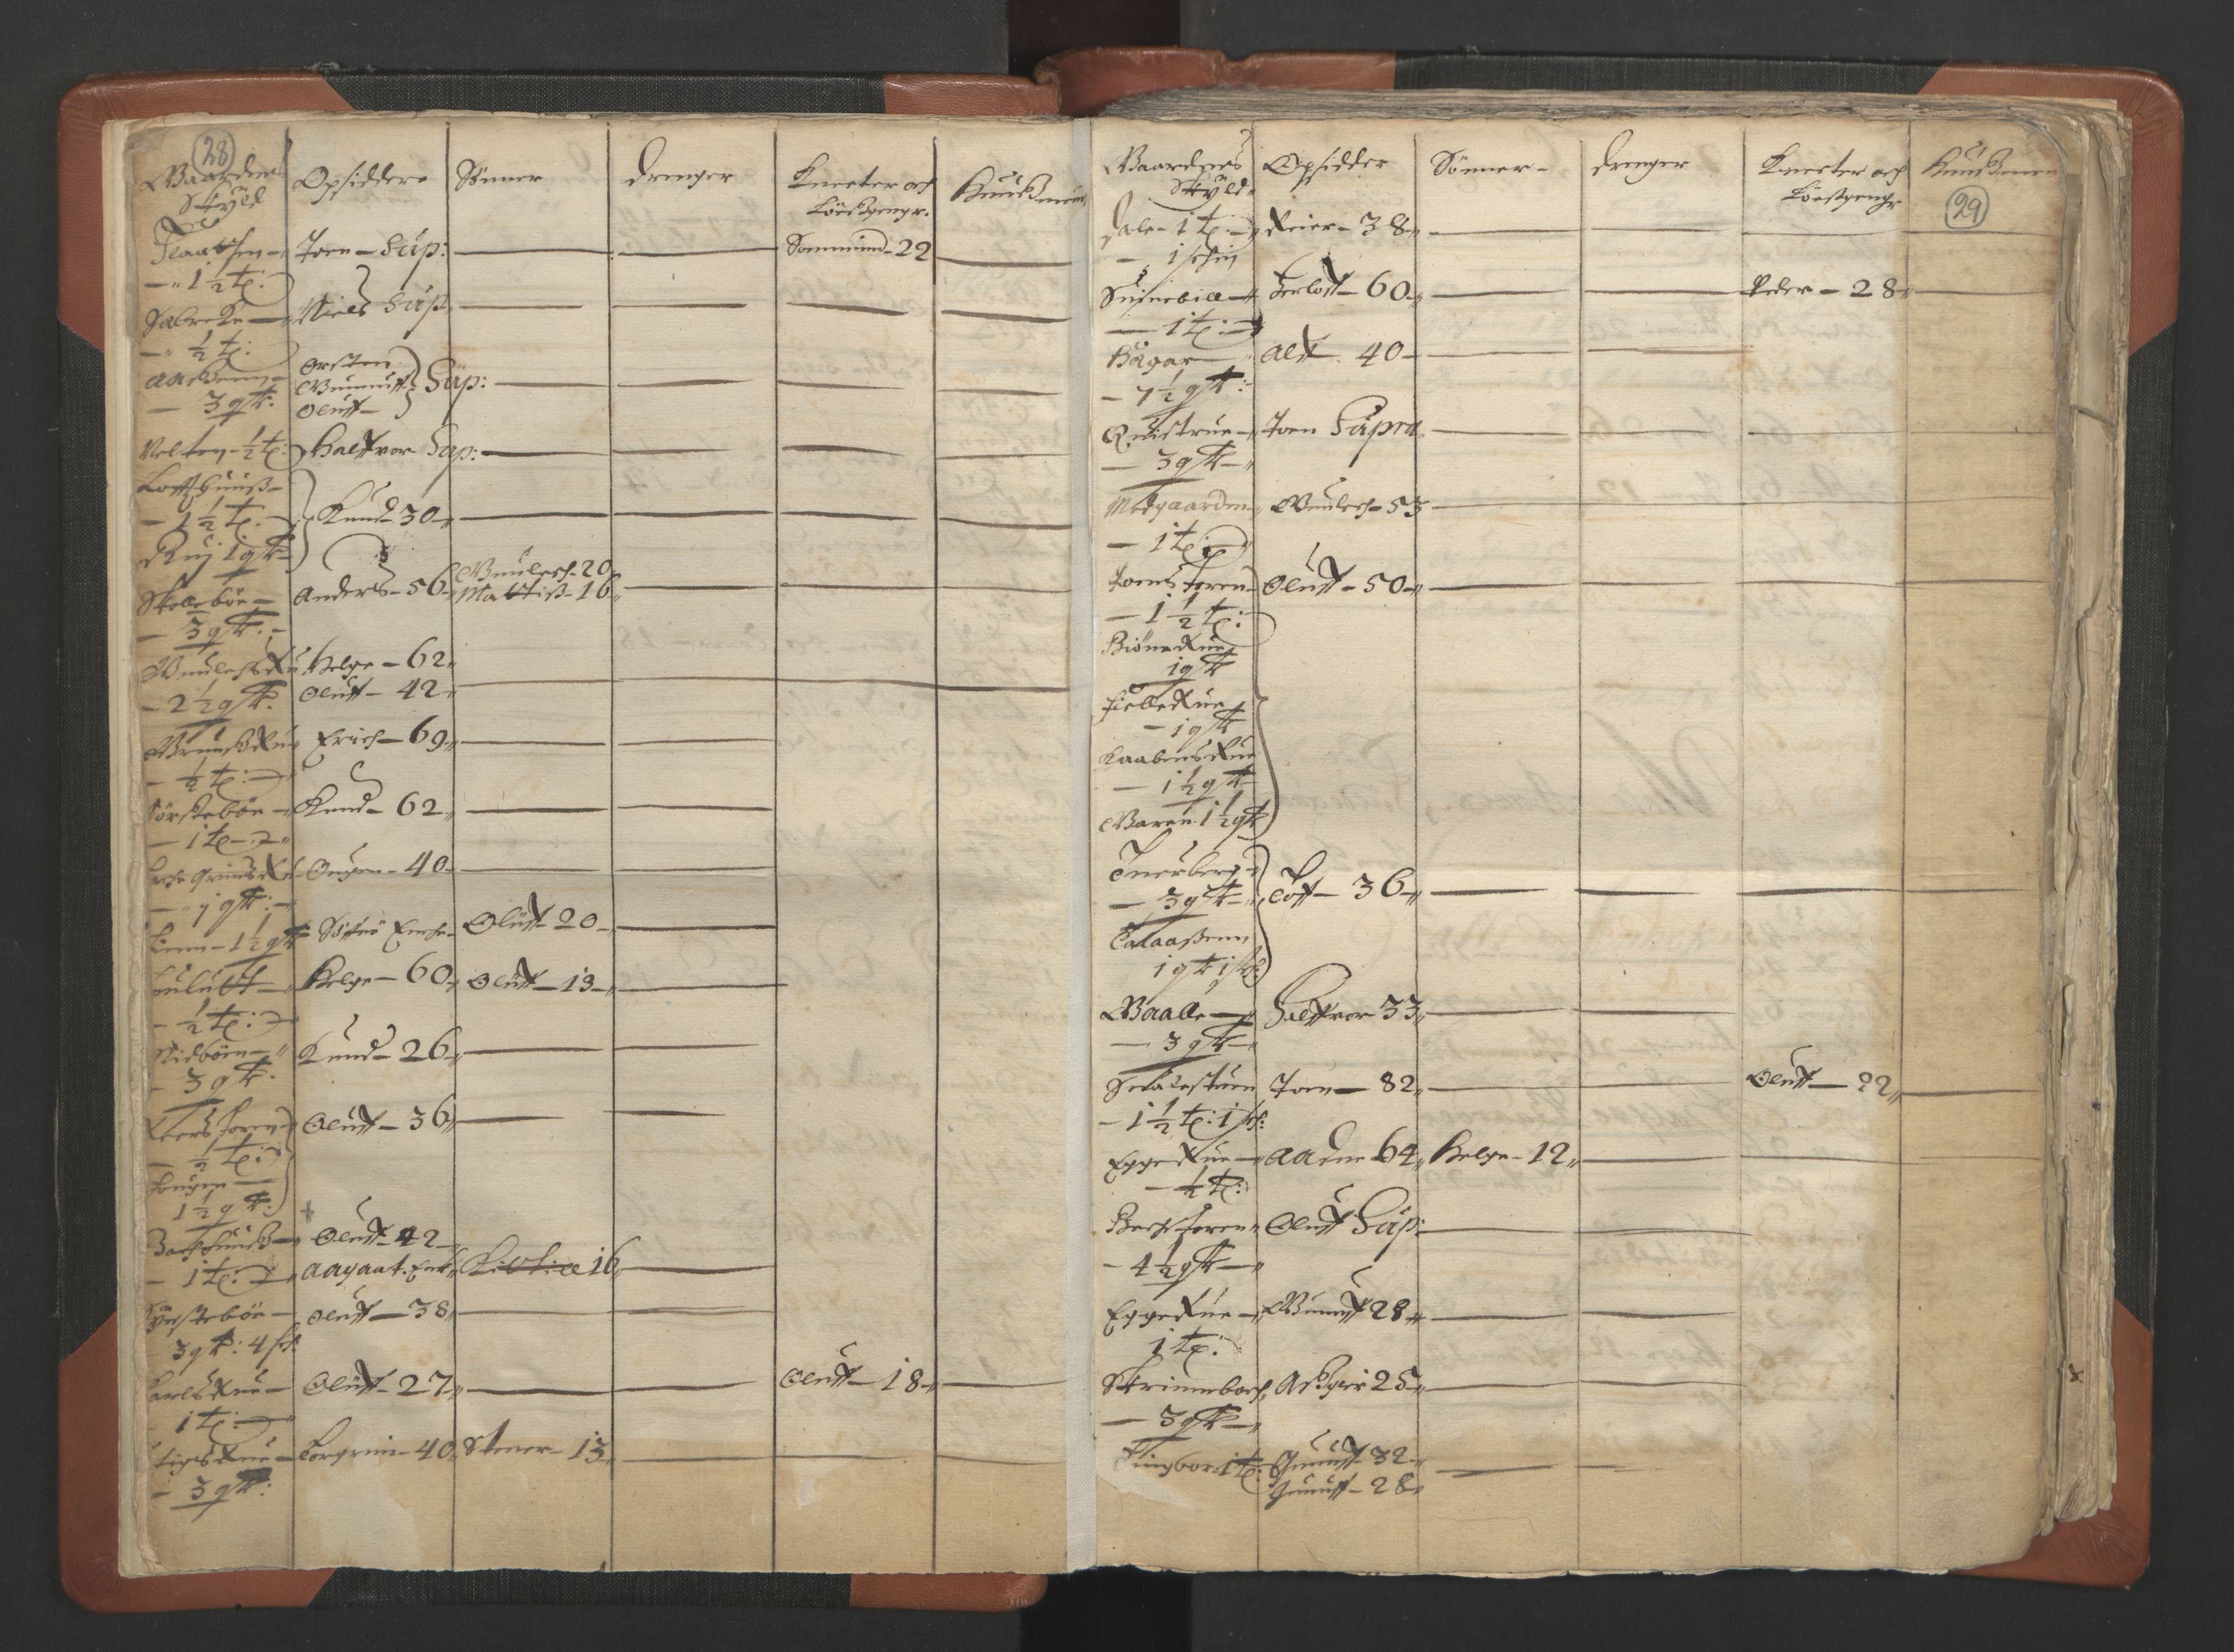 RA, Vicar's Census 1664-1666, no. 12: Øvre Telemark deanery, Nedre Telemark deanery and Bamble deanery, 1664-1666, p. 28-29